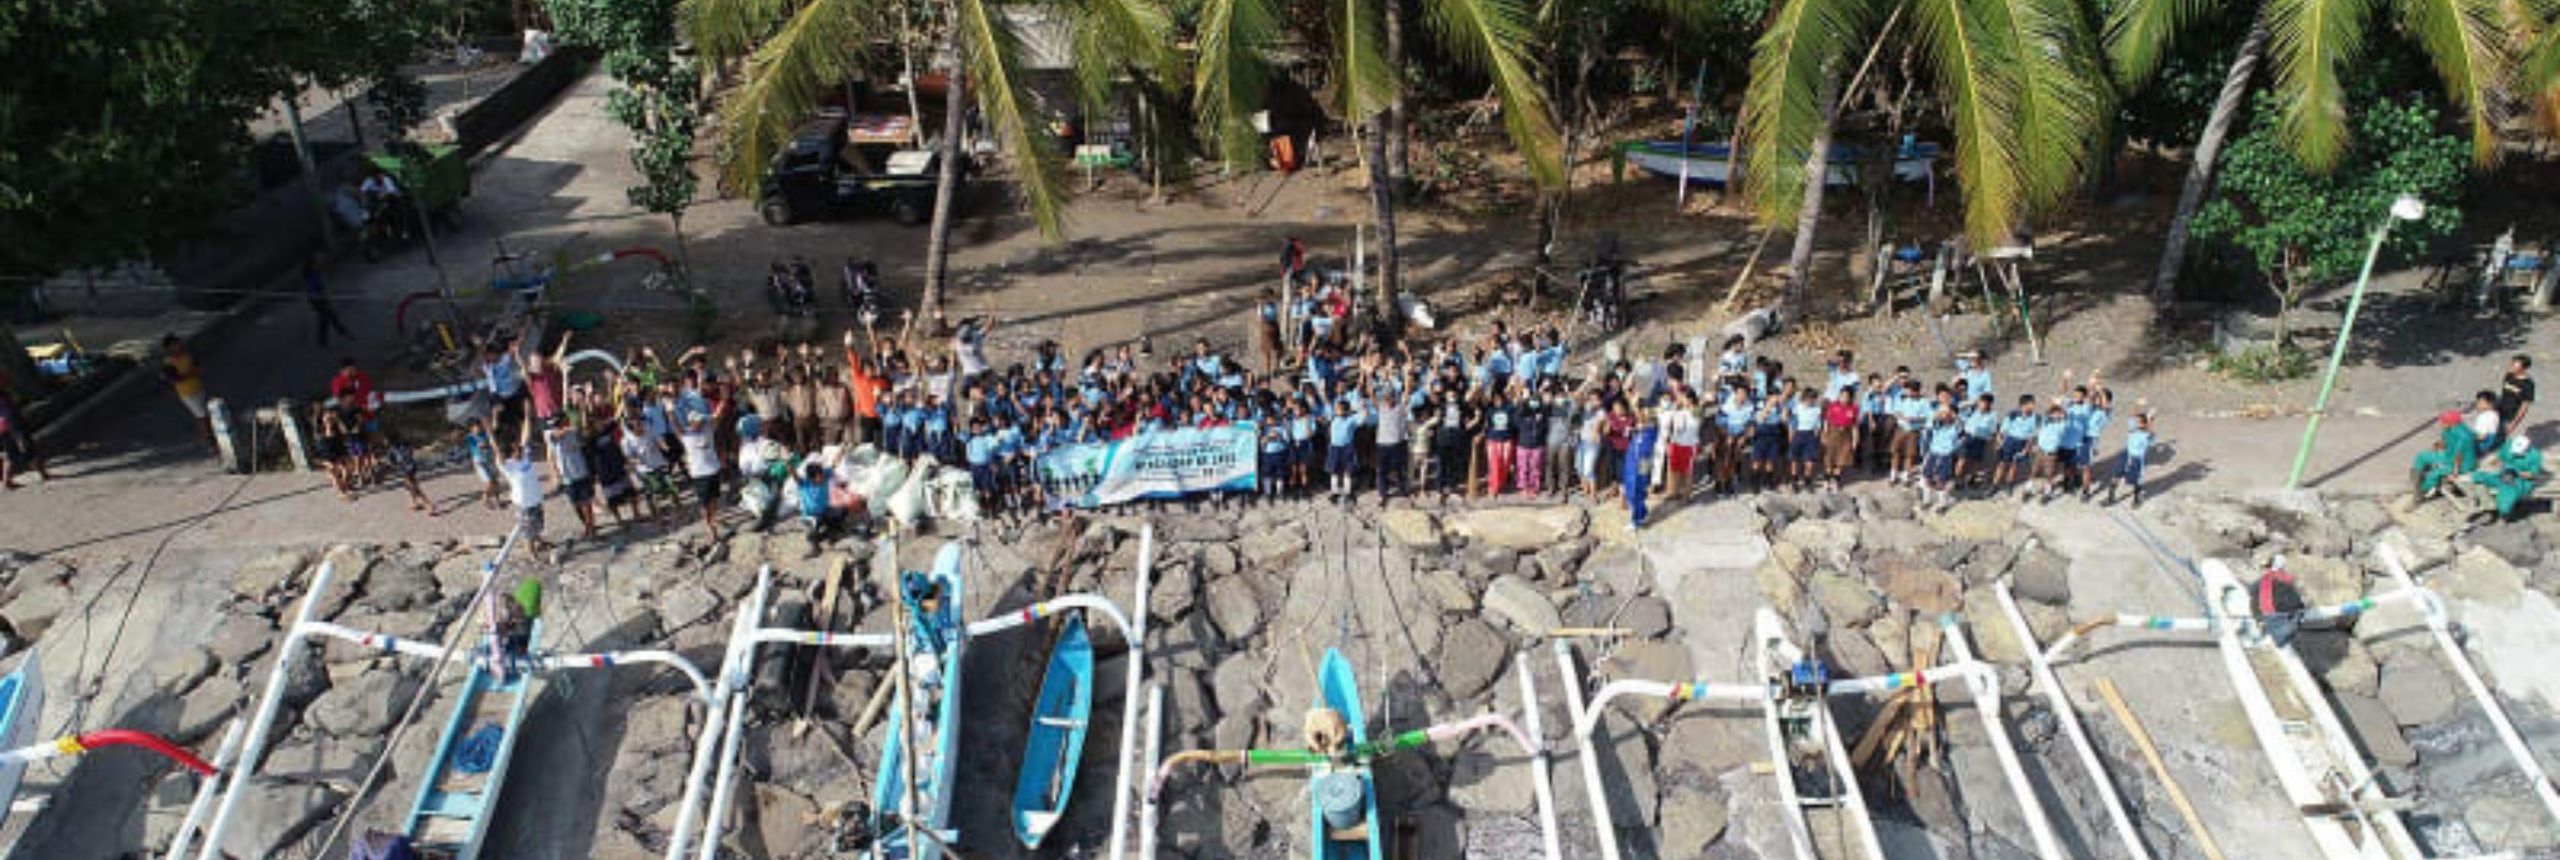 Turning the Tide on Balis Plastic Problem image 1